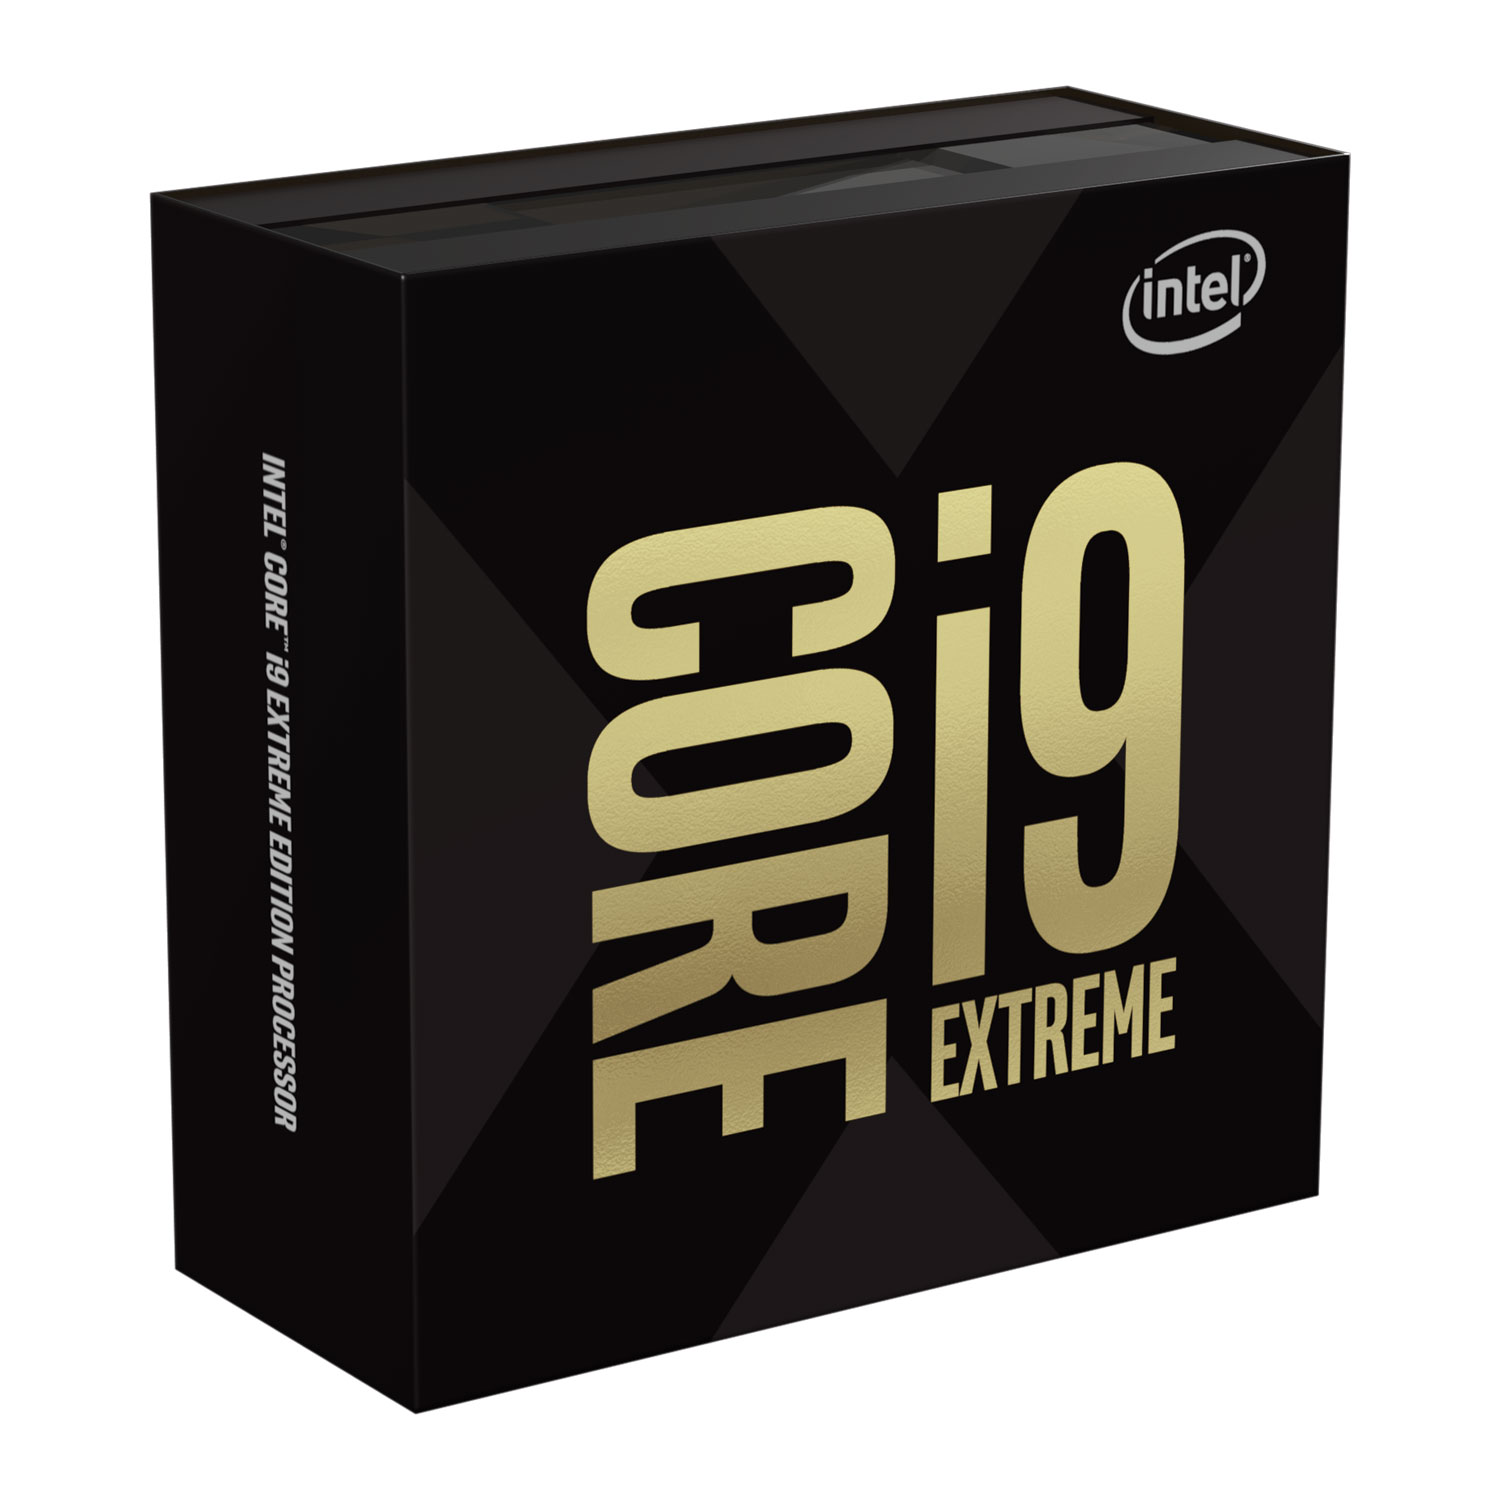 Intel - Intel Core i9-10980Xe Extreme (Cascade Lake-X) Socket LGA2066 Processor - R